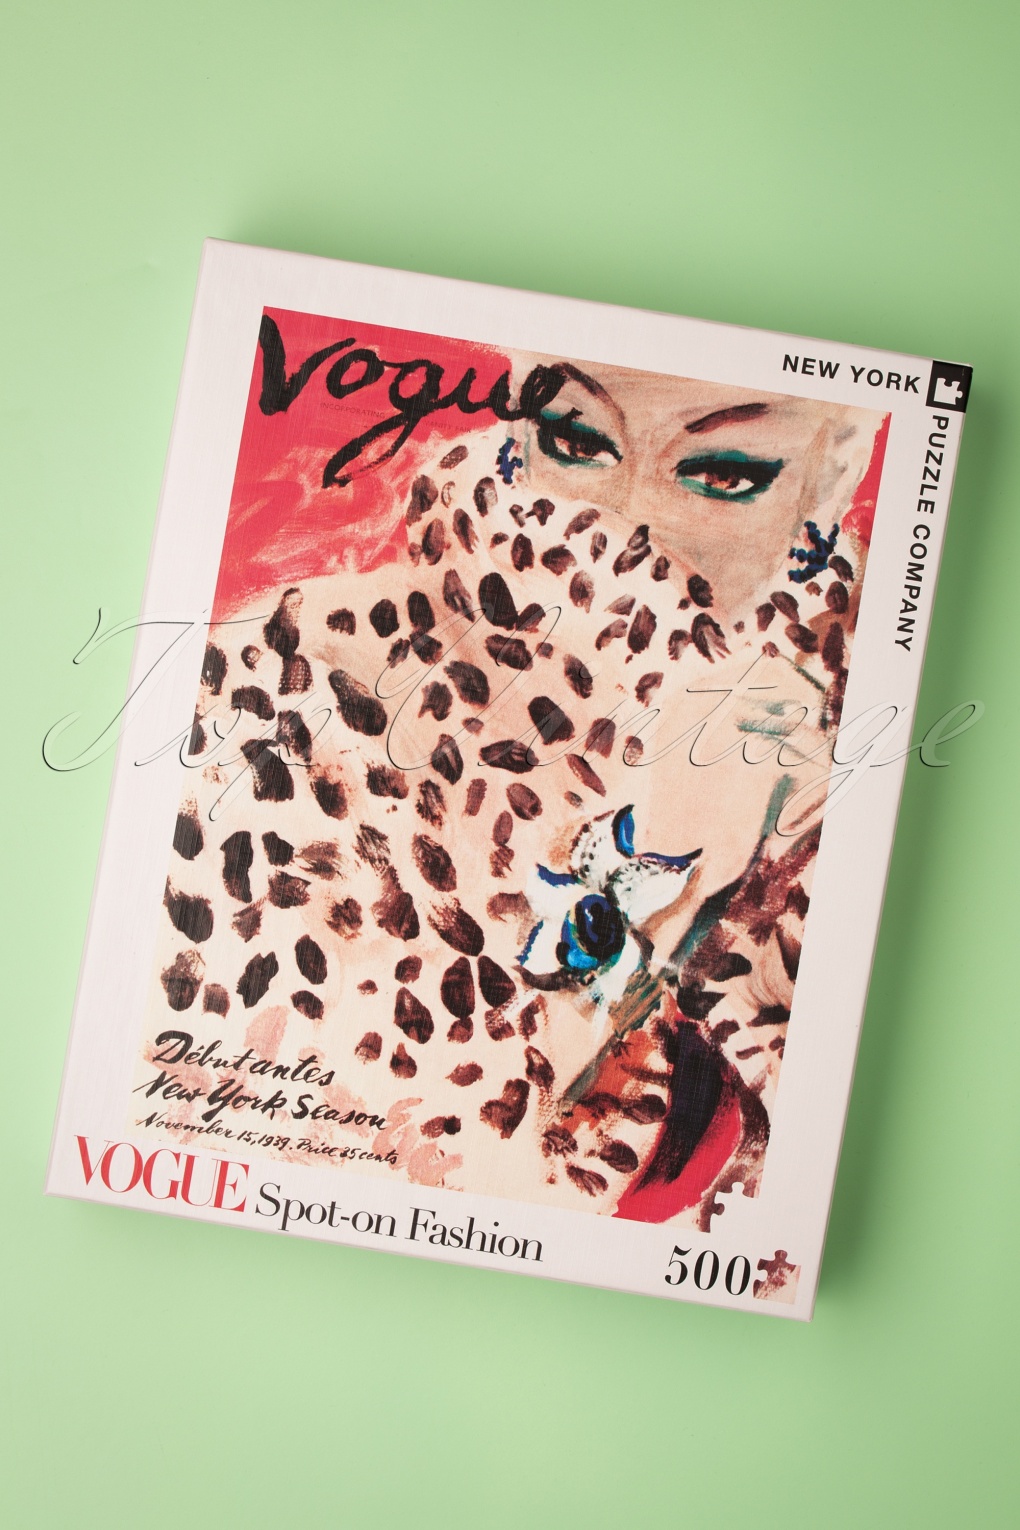 Vogue "Spot On Fashion" 500 Piece Jigsaw Puzzle 